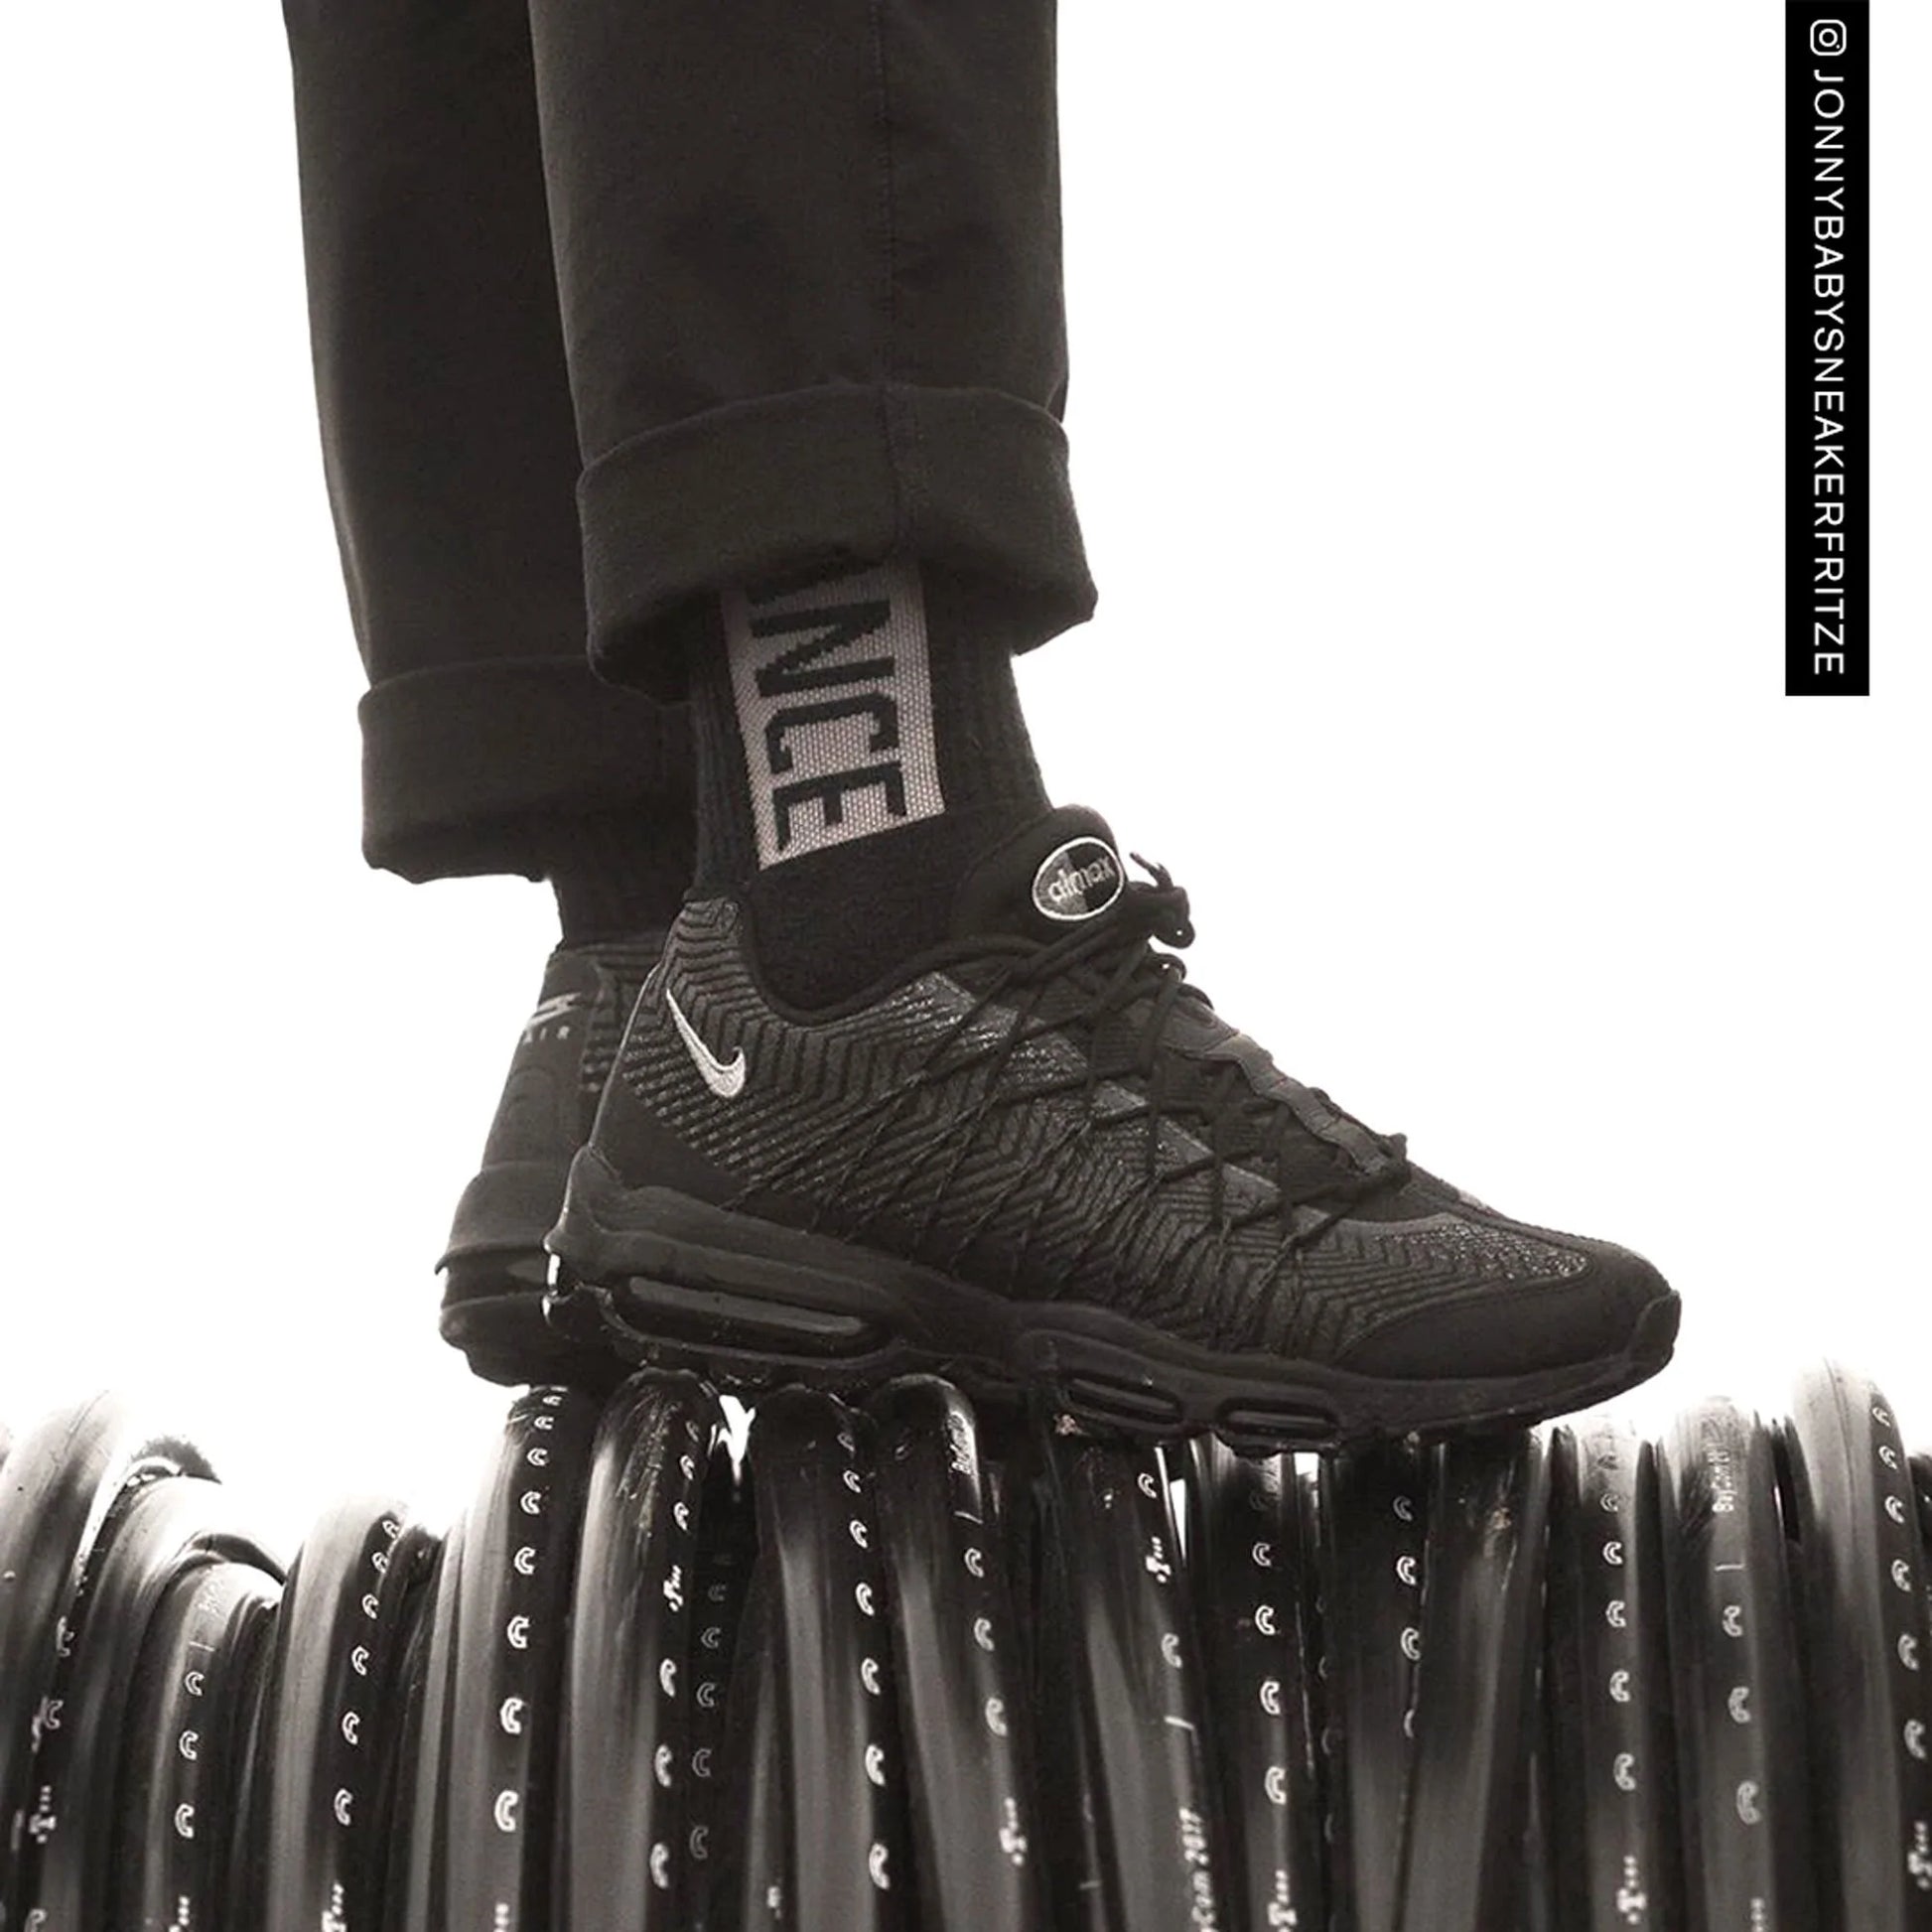 Contrast Clothing Worthing Nike sneakers stance of socks black